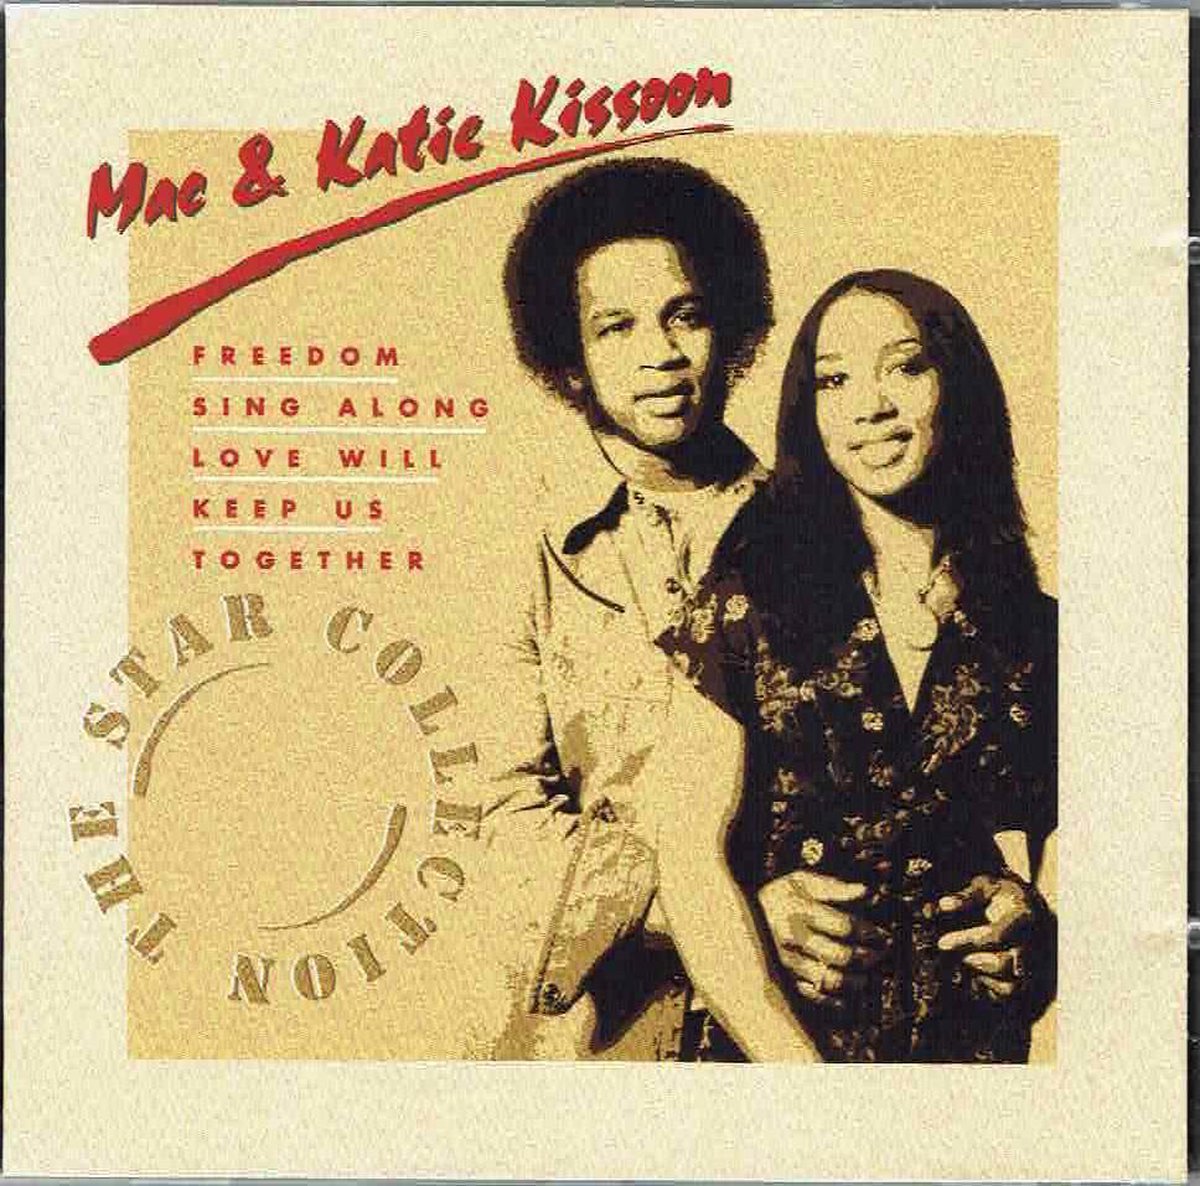 MAC & KATIE KISSOON - THE STAR COLLECTION - MAC & KATIE KISSOON